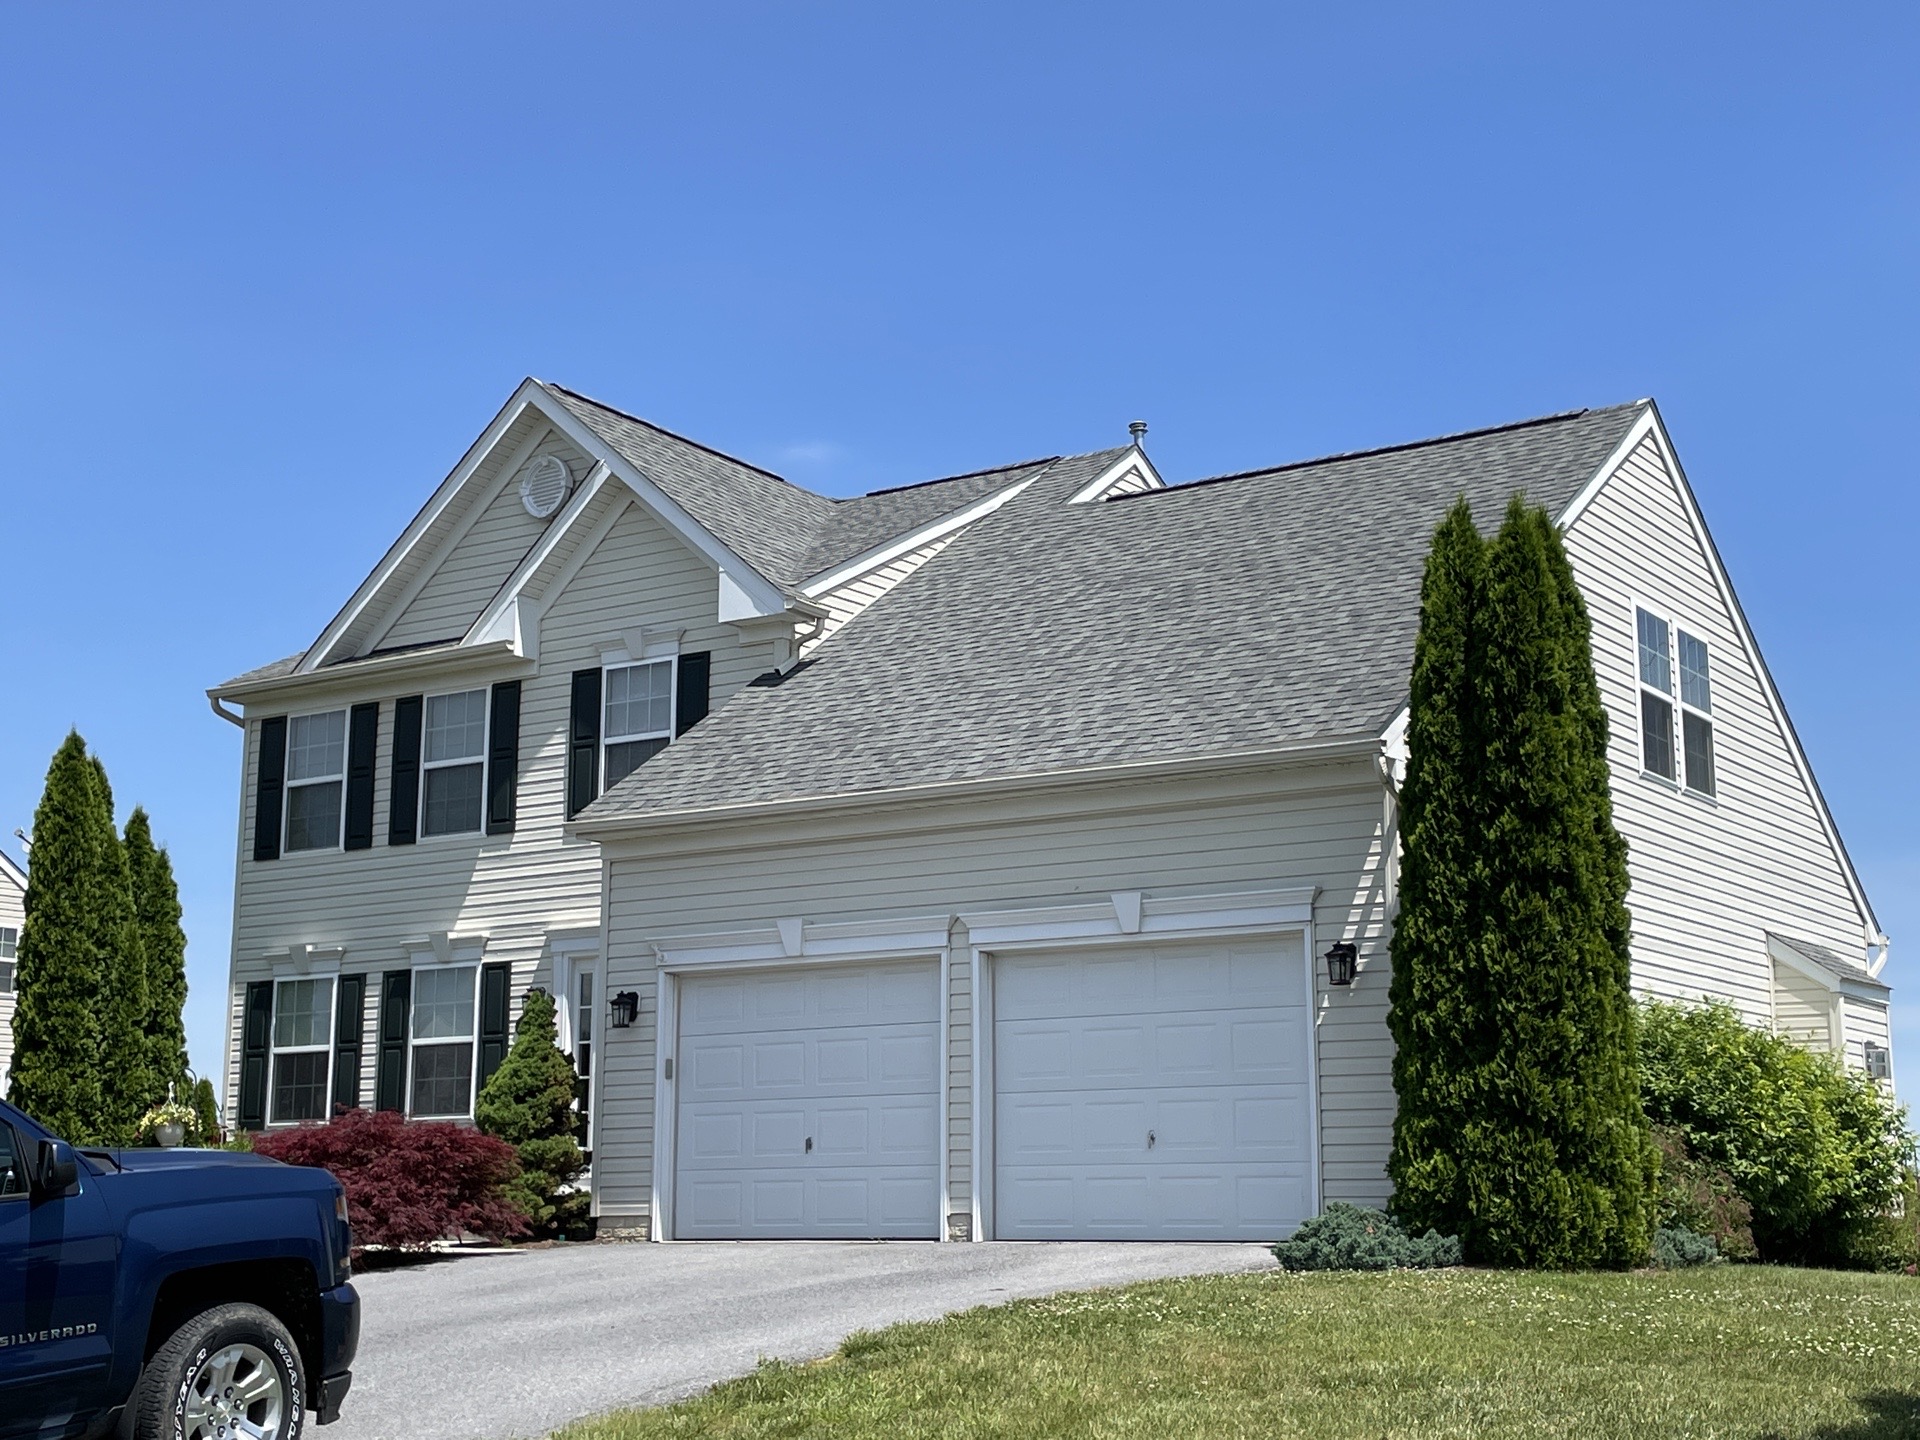 3 Clovers Roofing & Construction Inc. 10480 Mercersburg Rd, Mercersburg Pennsylvania 17236